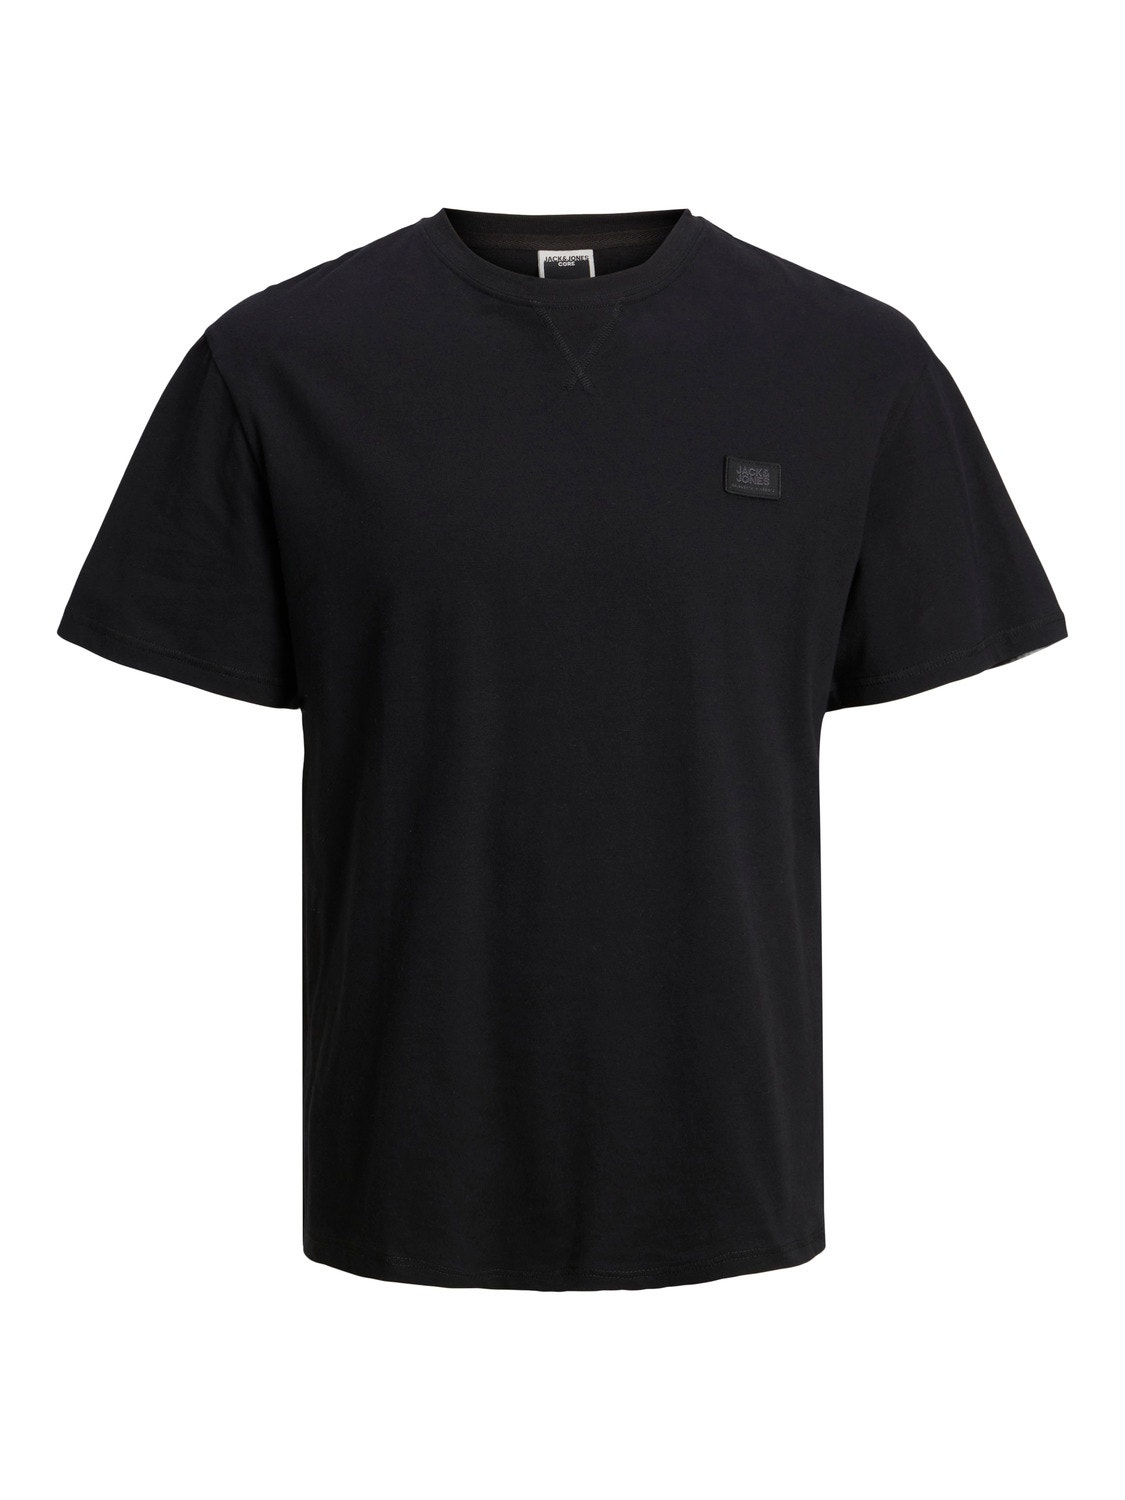 Jack & Jones Logo Pyöreä pääntie T-paita -Black - 12240266